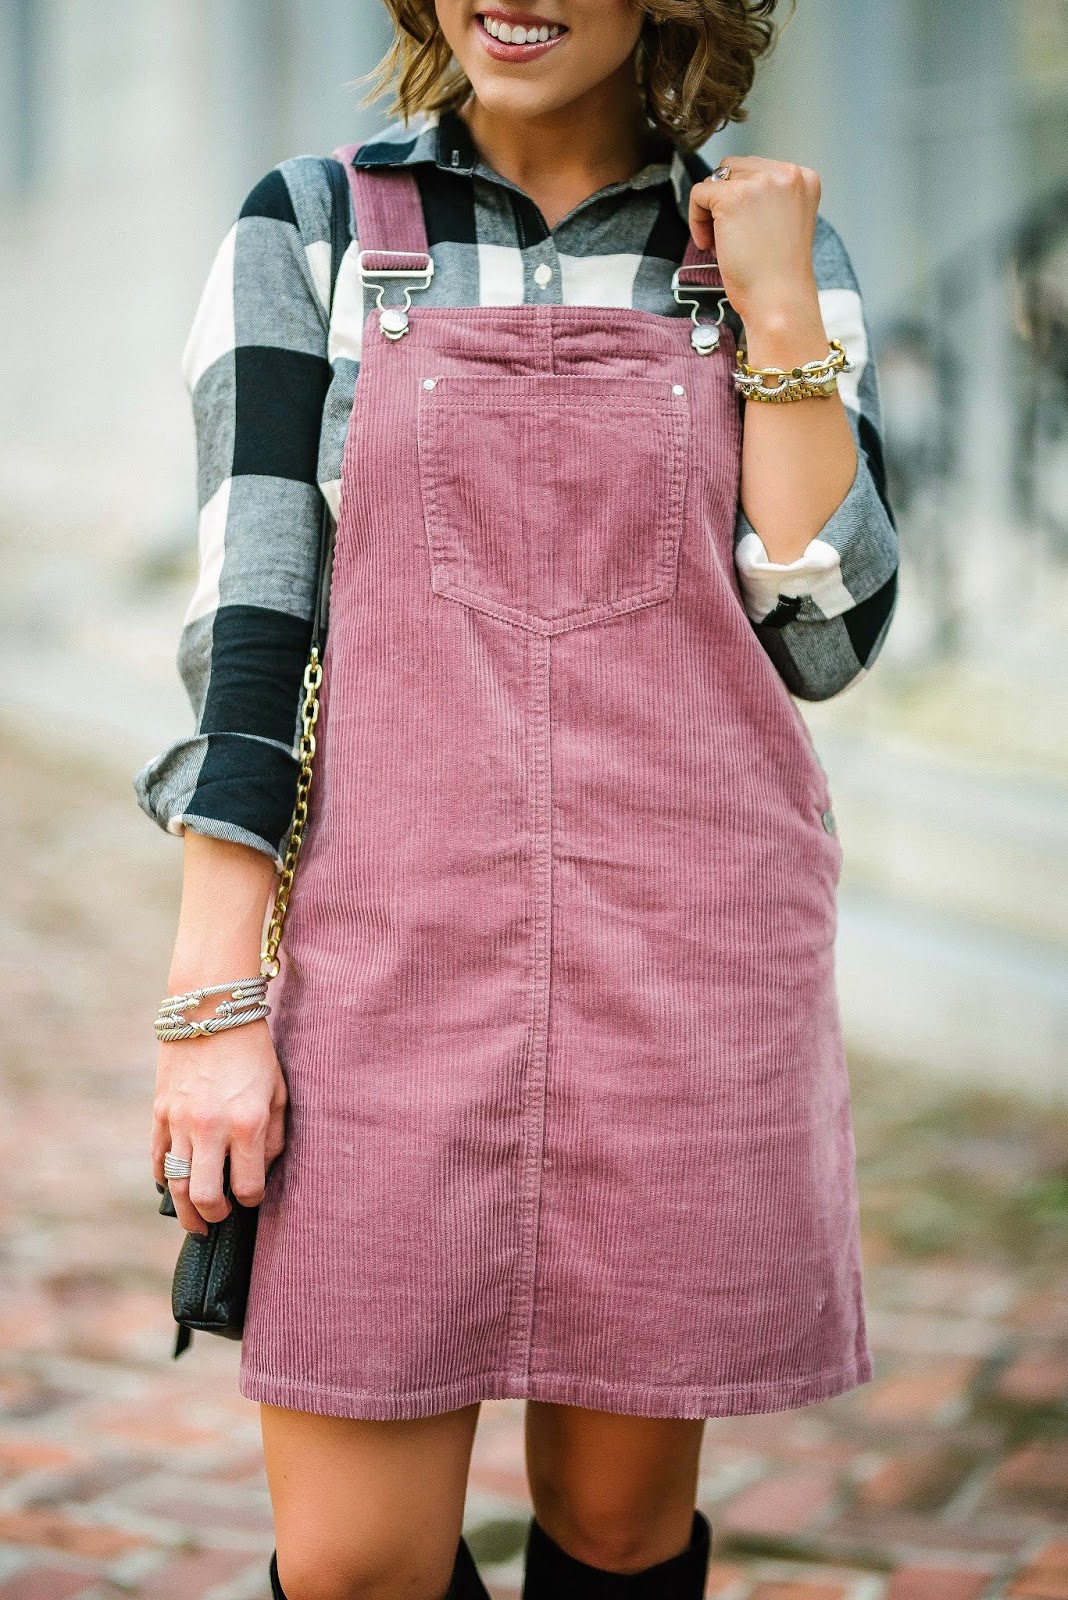 Fall Style: Pink Corduroy Pini + Black and White Plaid Shirt - Something Delightful Blog